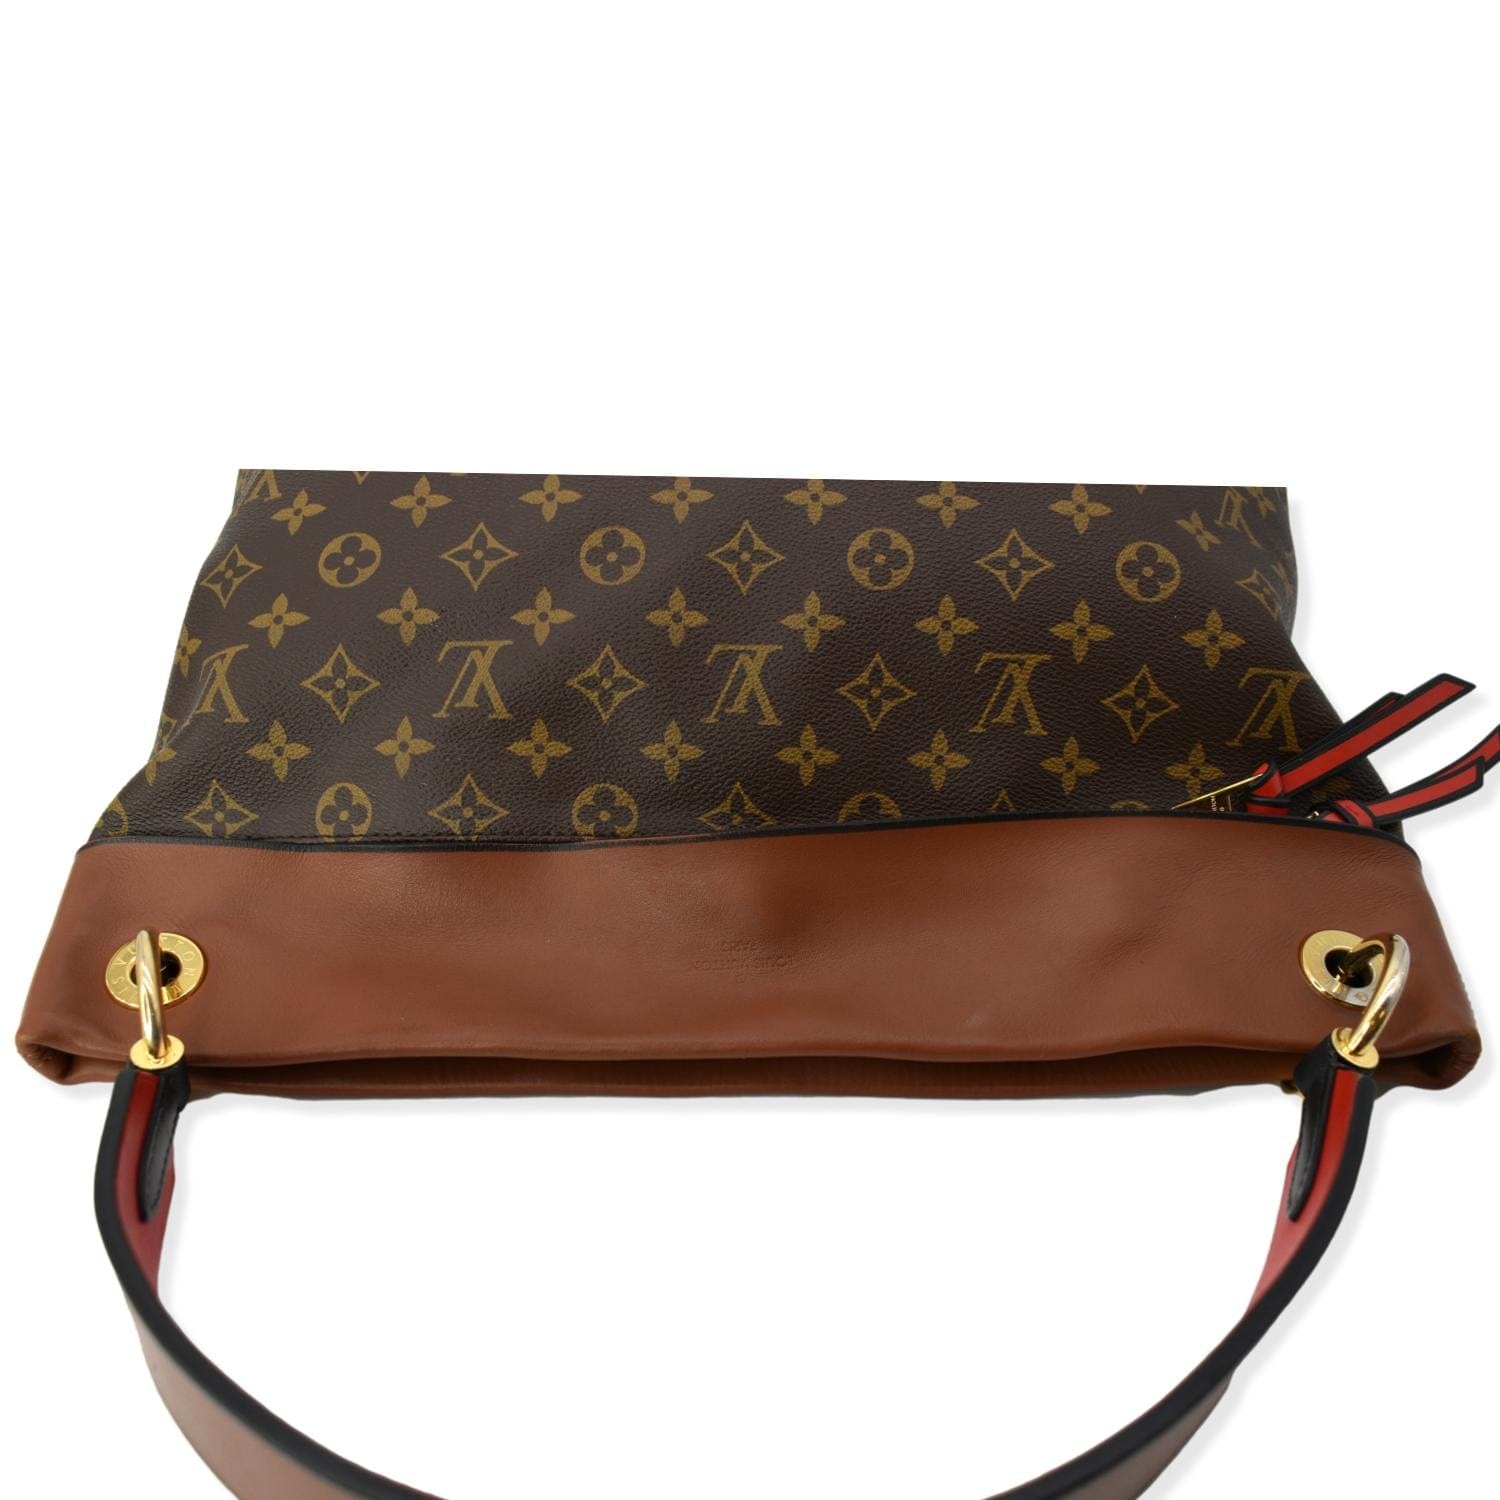 100% Authentic Louis Vuitton Tuileries Hobo Shoulder Bag Pre-owned